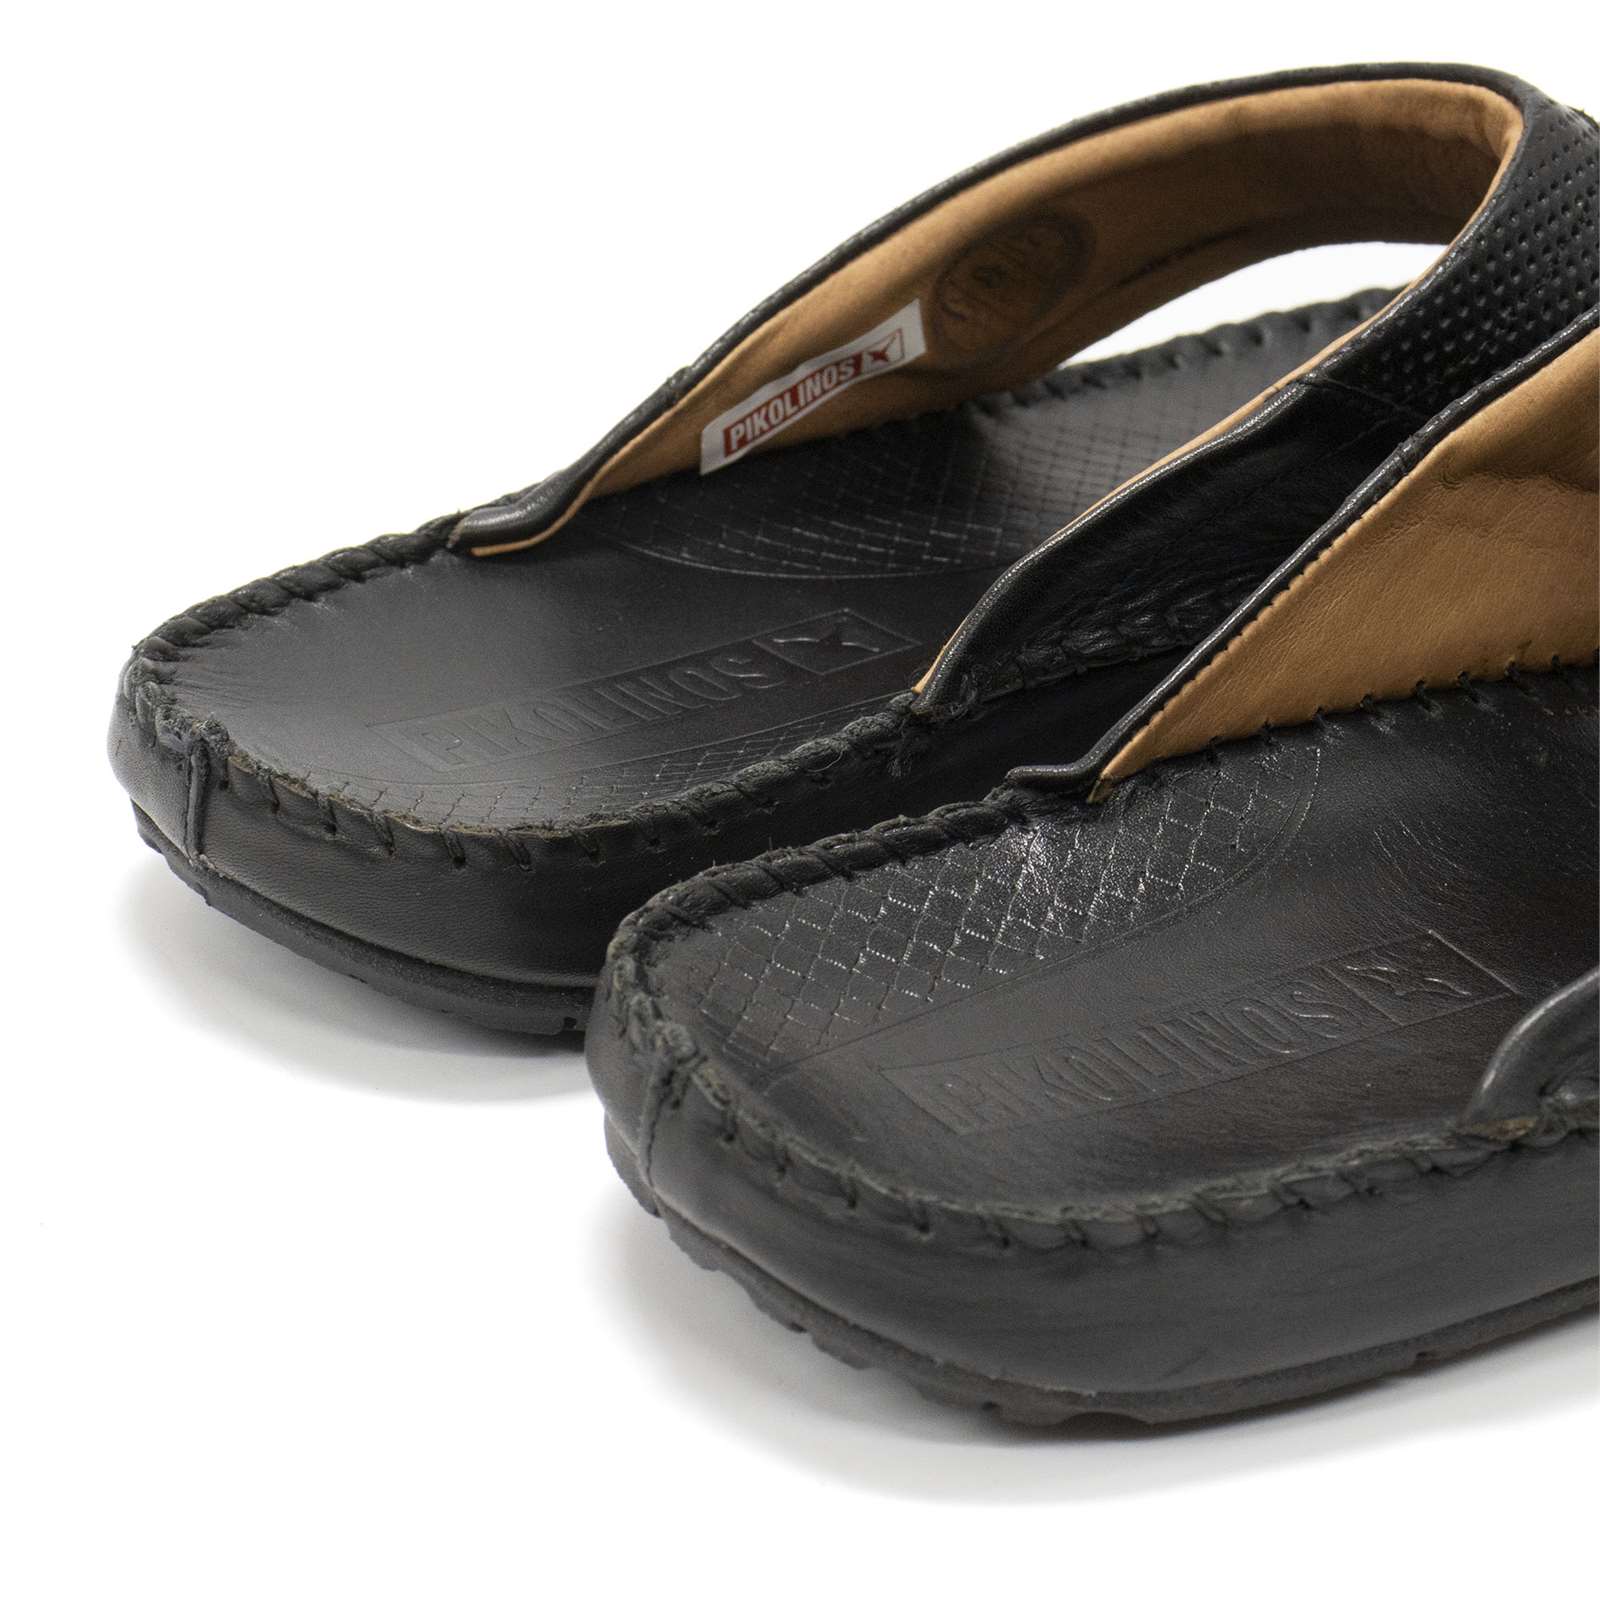 Pikolinos Men Tarifa Leather T-Strap Sandals